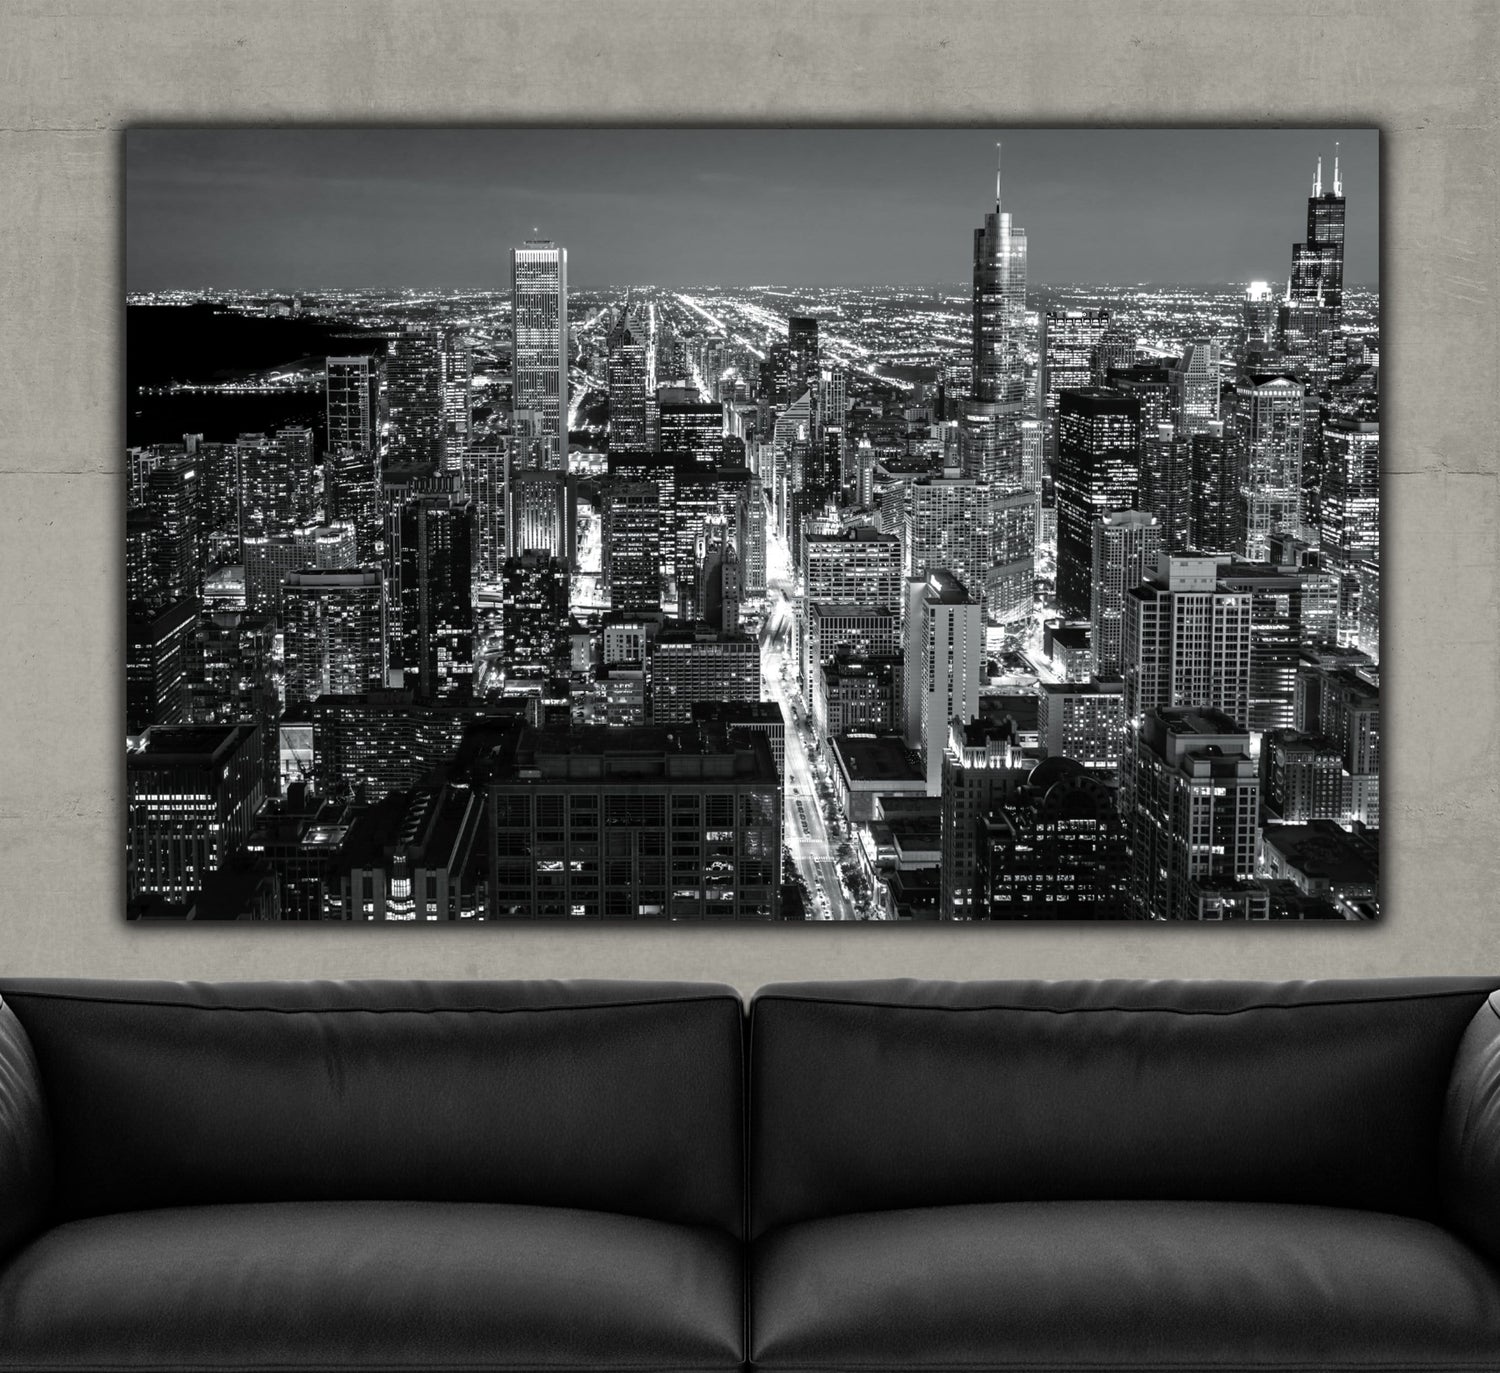 Chicago Skyline - Magnificent Mile - Canvas Wall Art - HolyCowCanvas